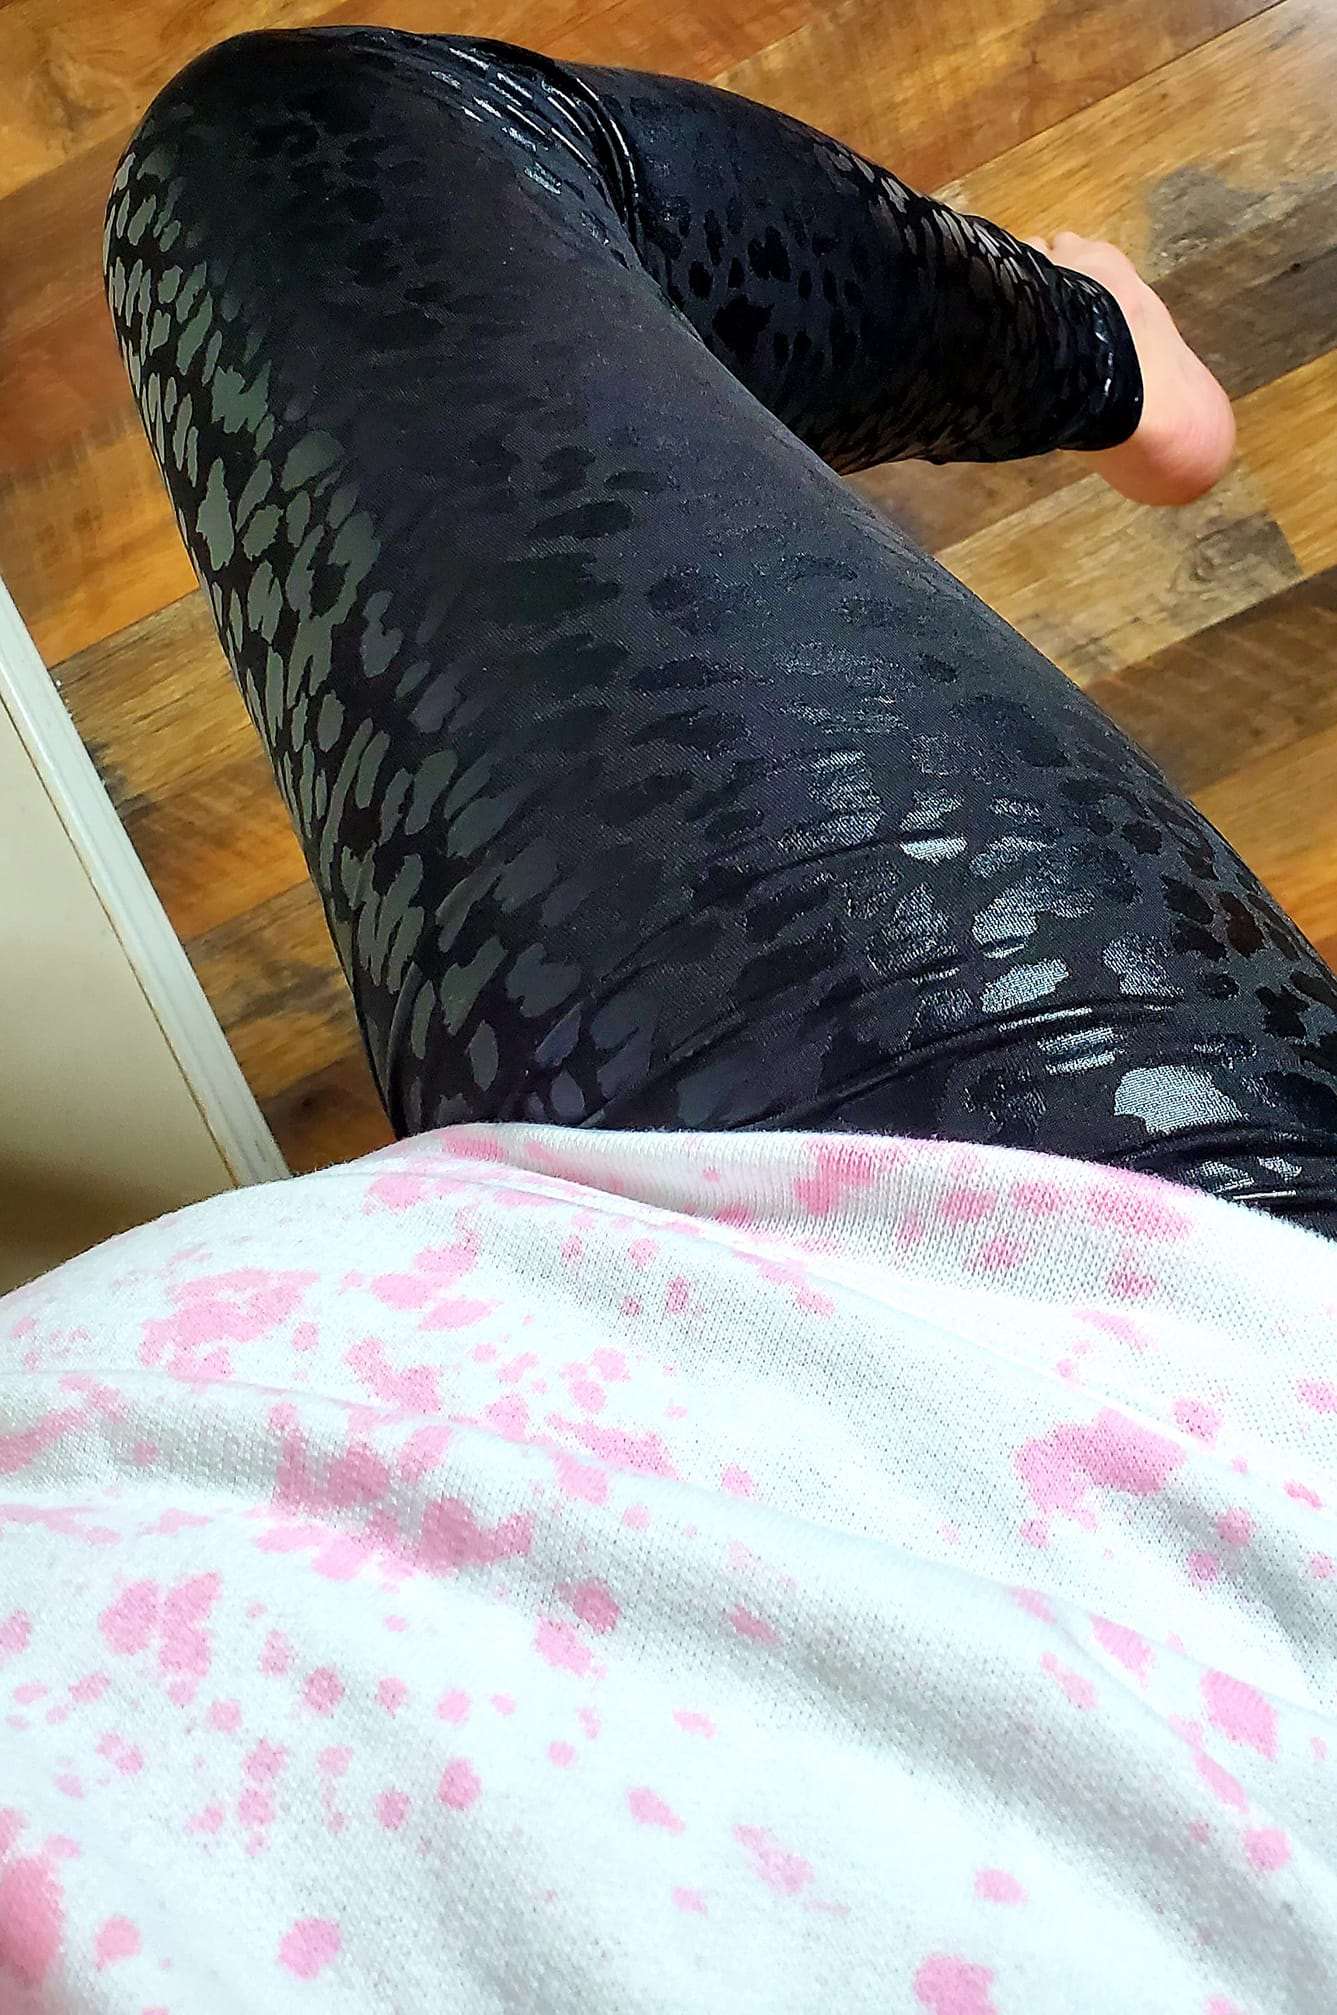 Black leopard print leggings. 